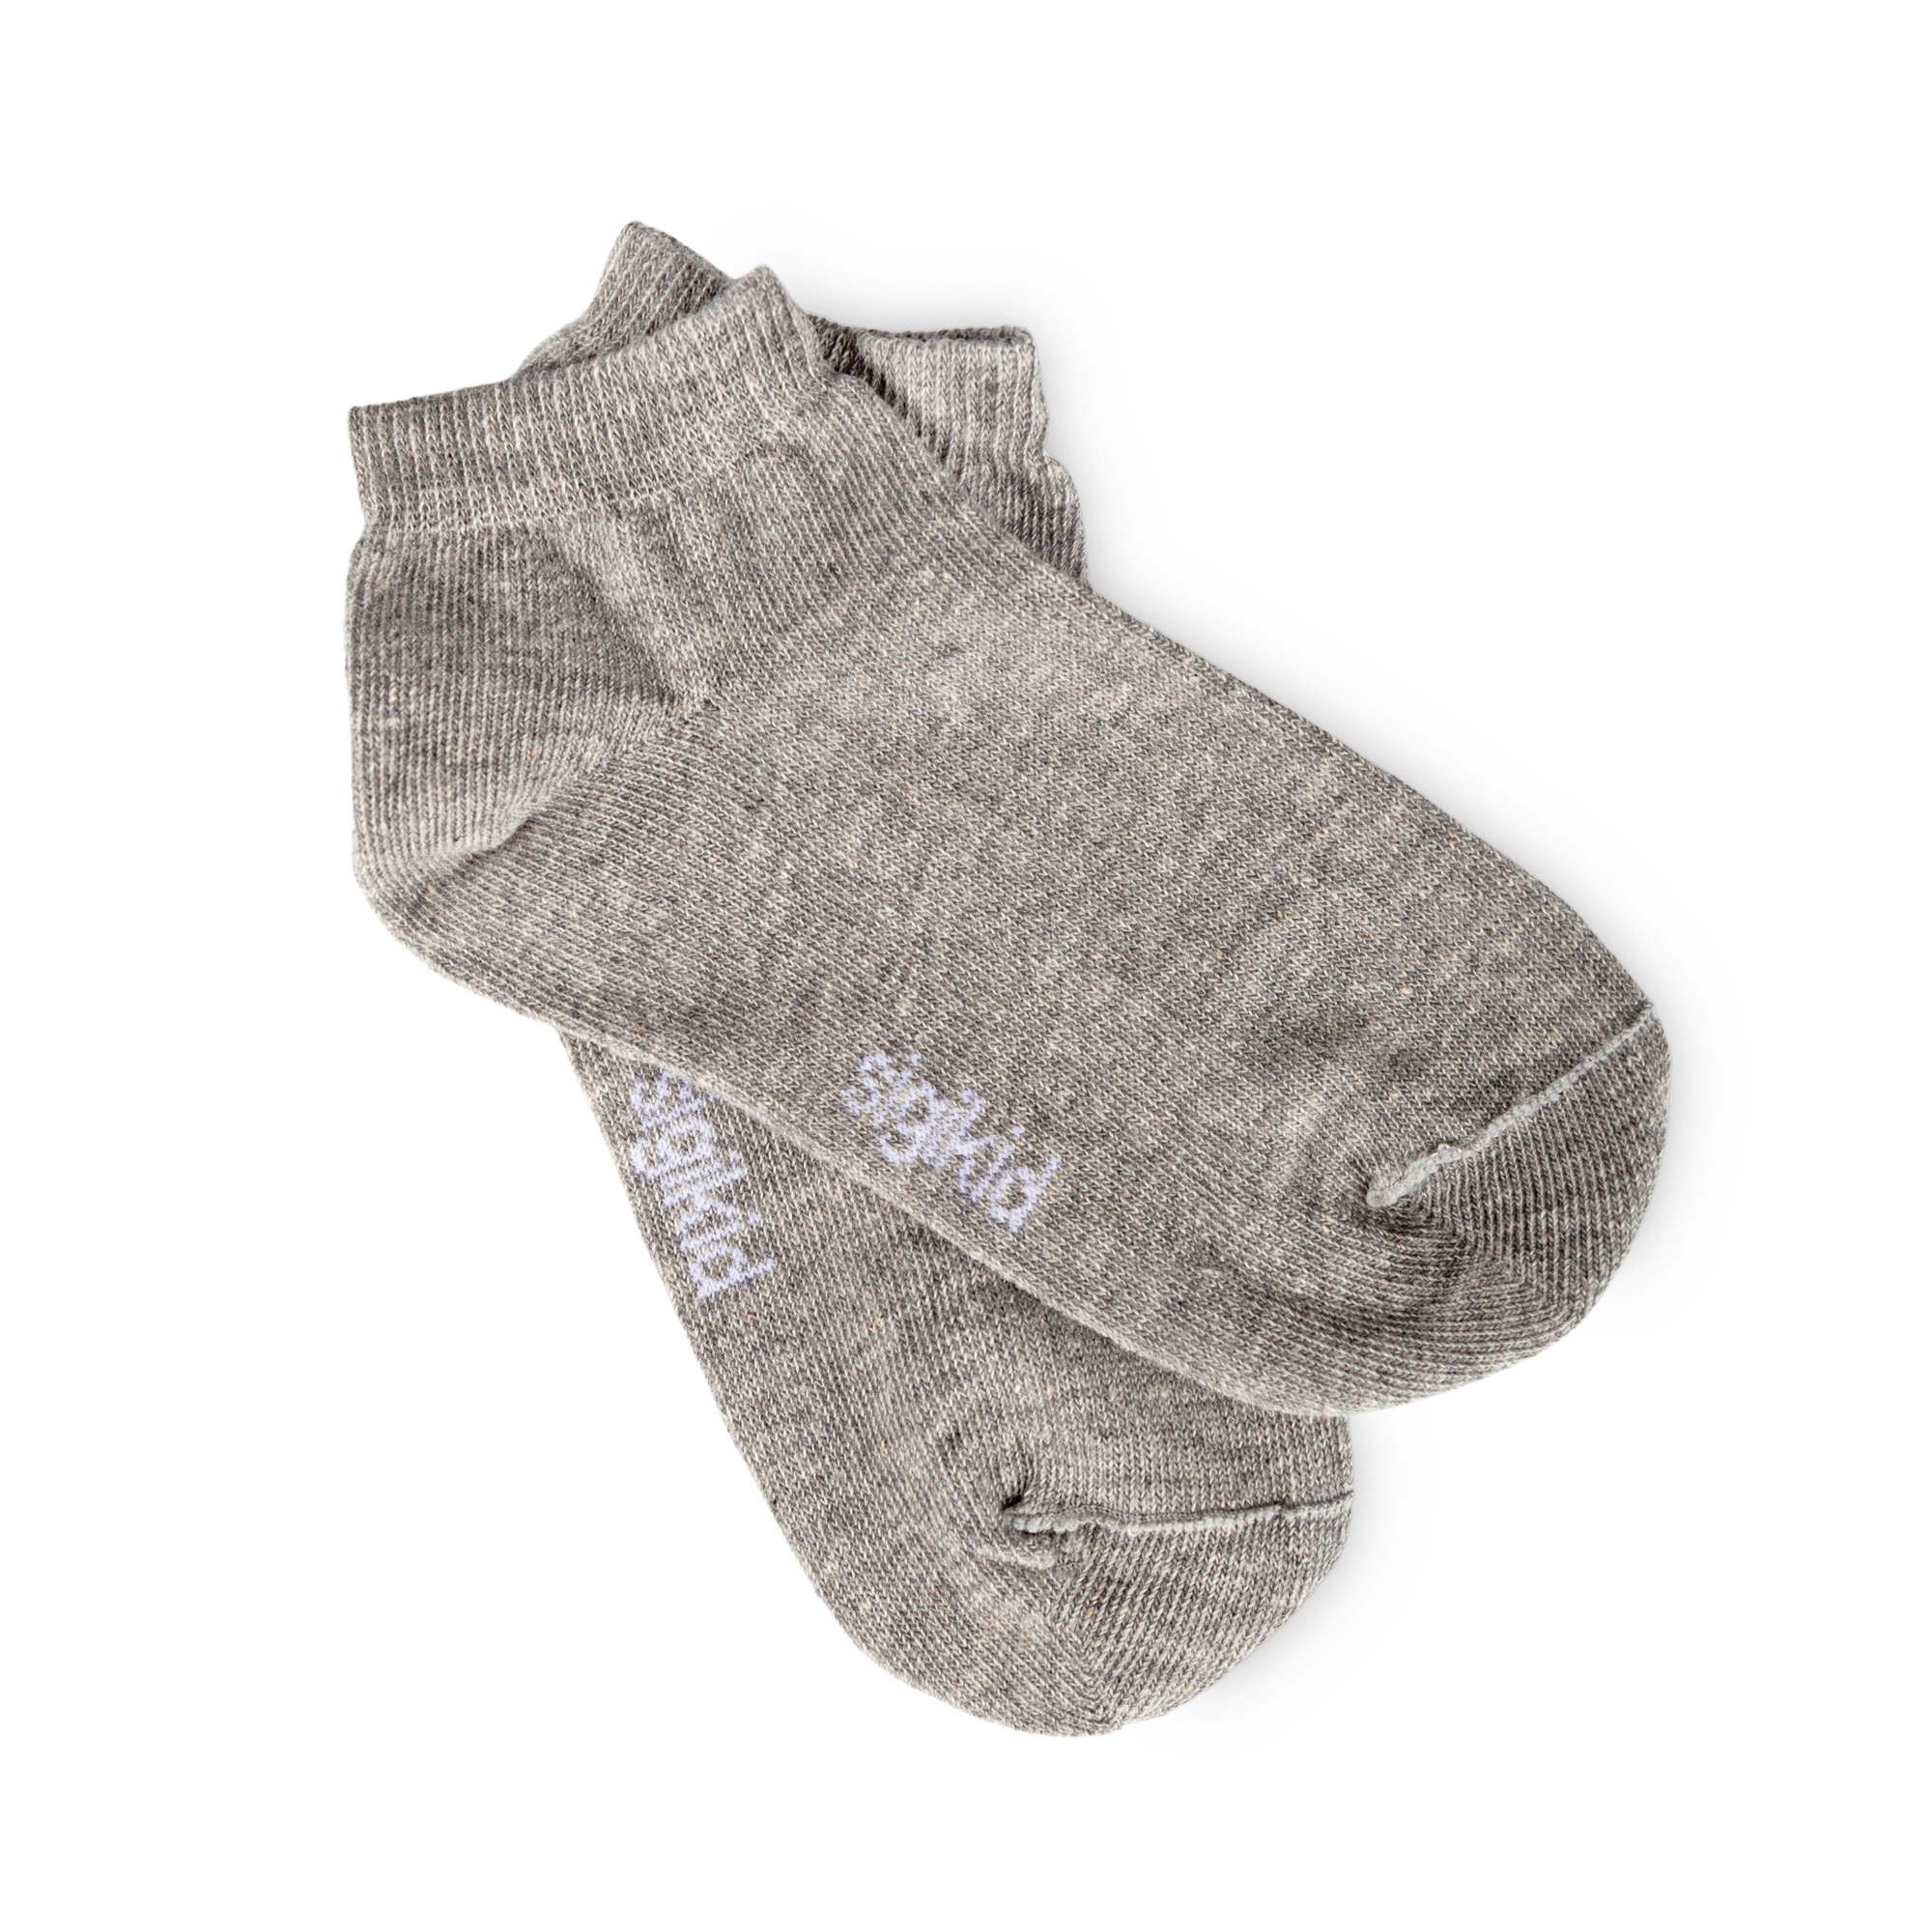 Children's trainer socks, grey marl